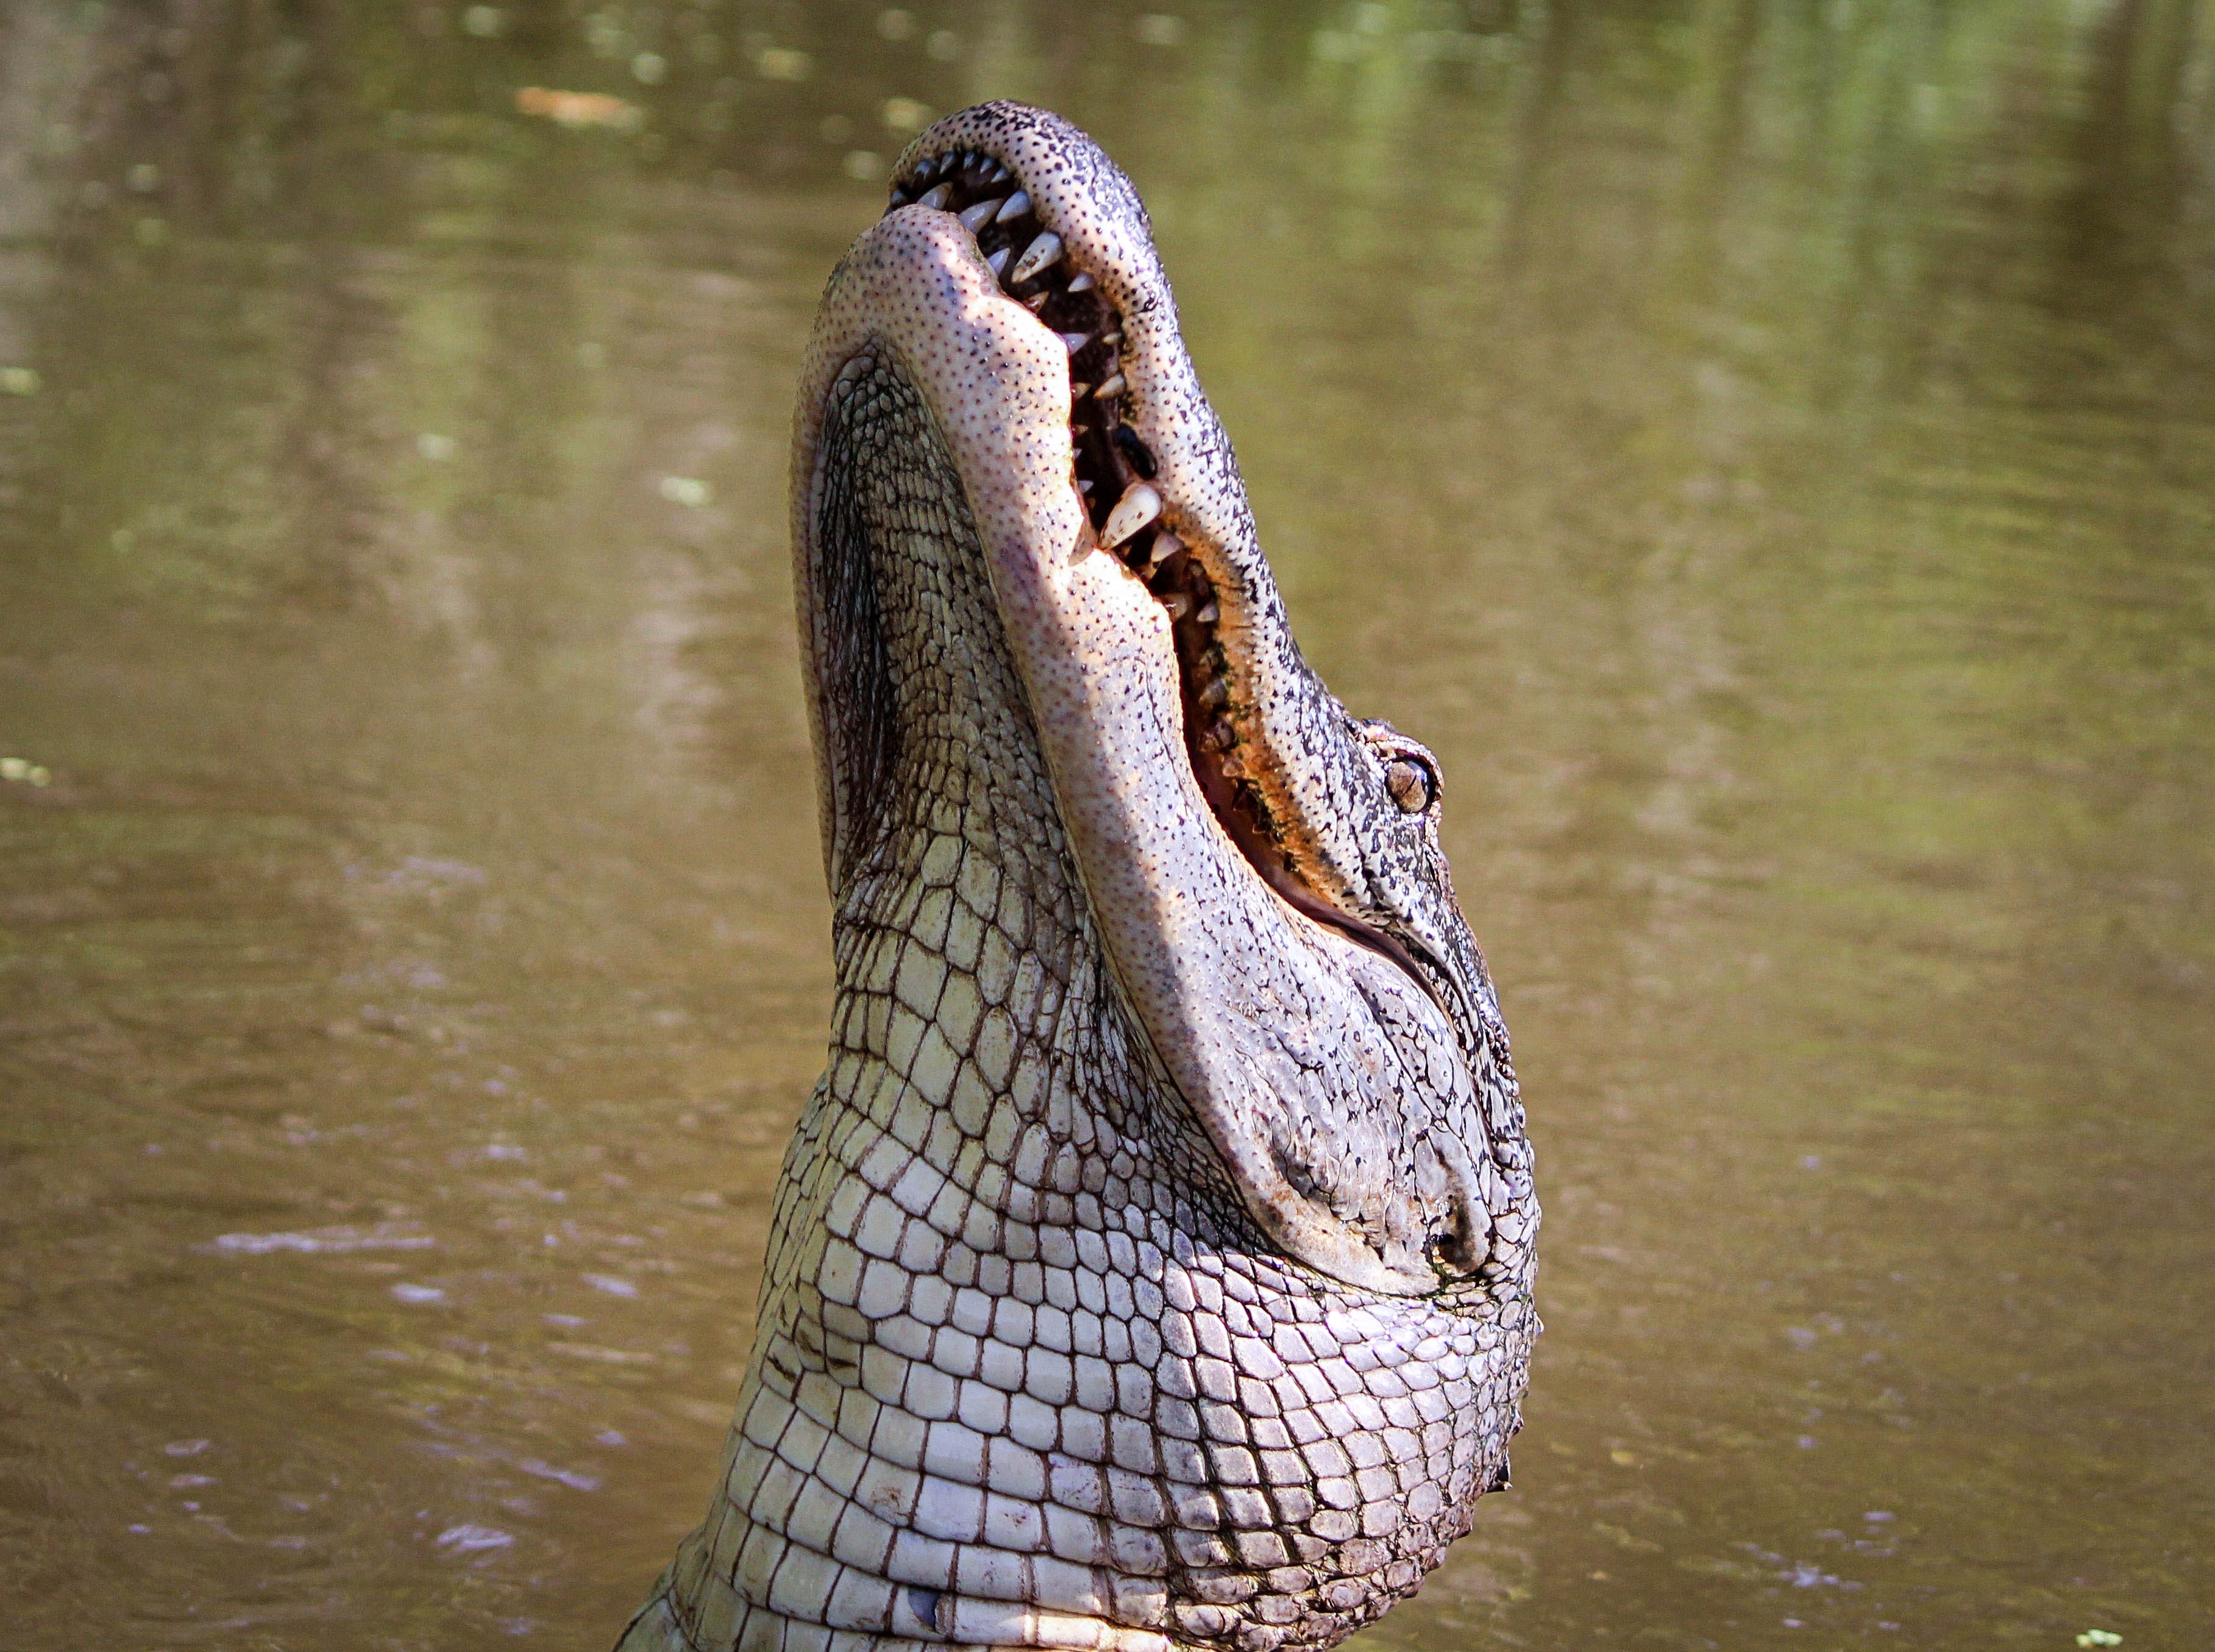 Popular Alligator Image for Phone